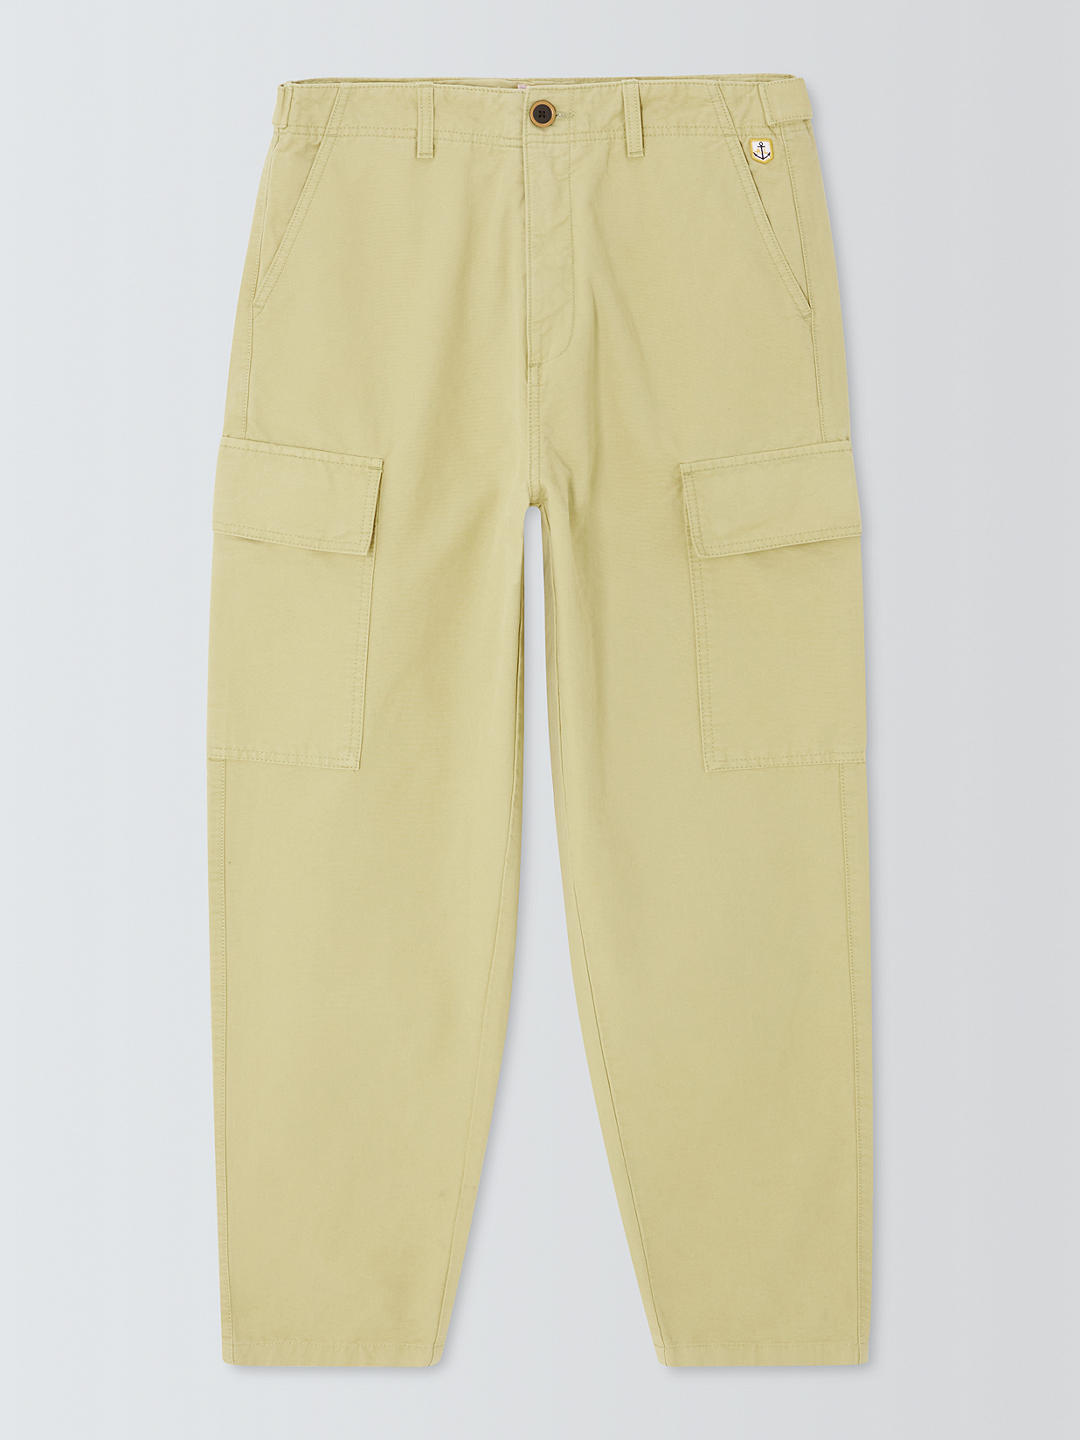 Armor Lux Pantalon Cargo Trousers, Pale Olive